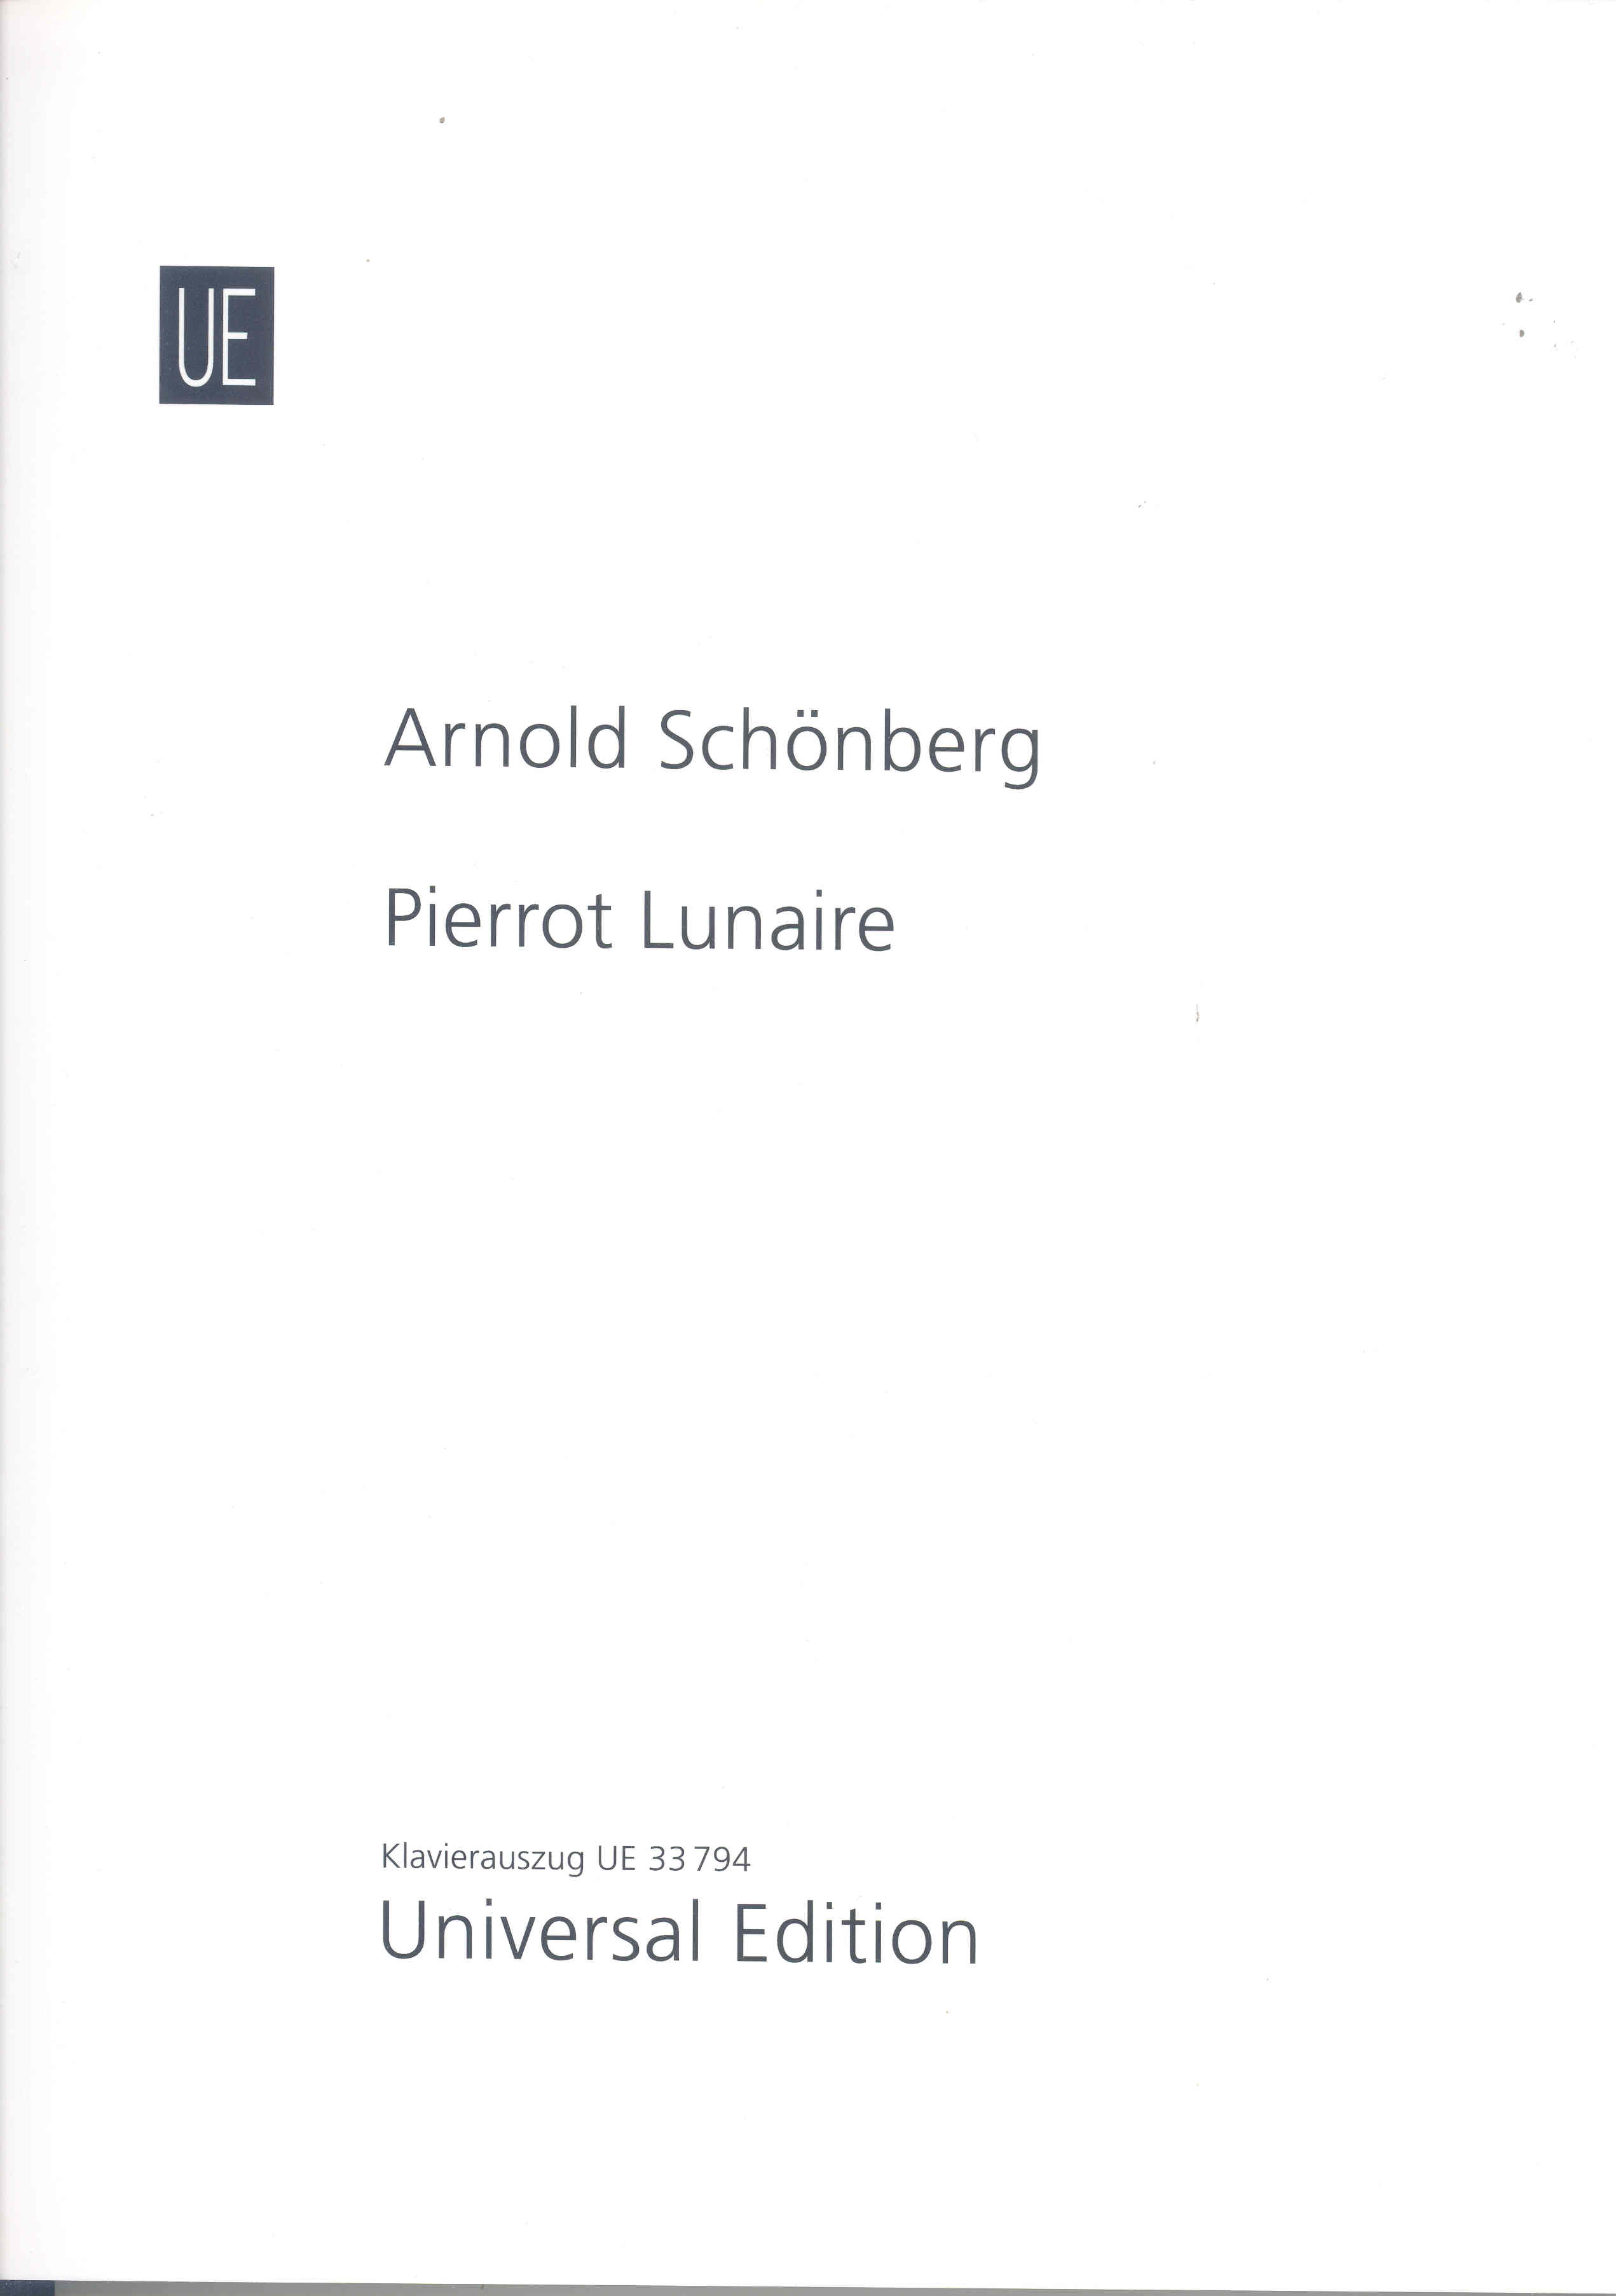 Schoenberg Pierrot Lunaire Vocal Score Sheet Music Songbook